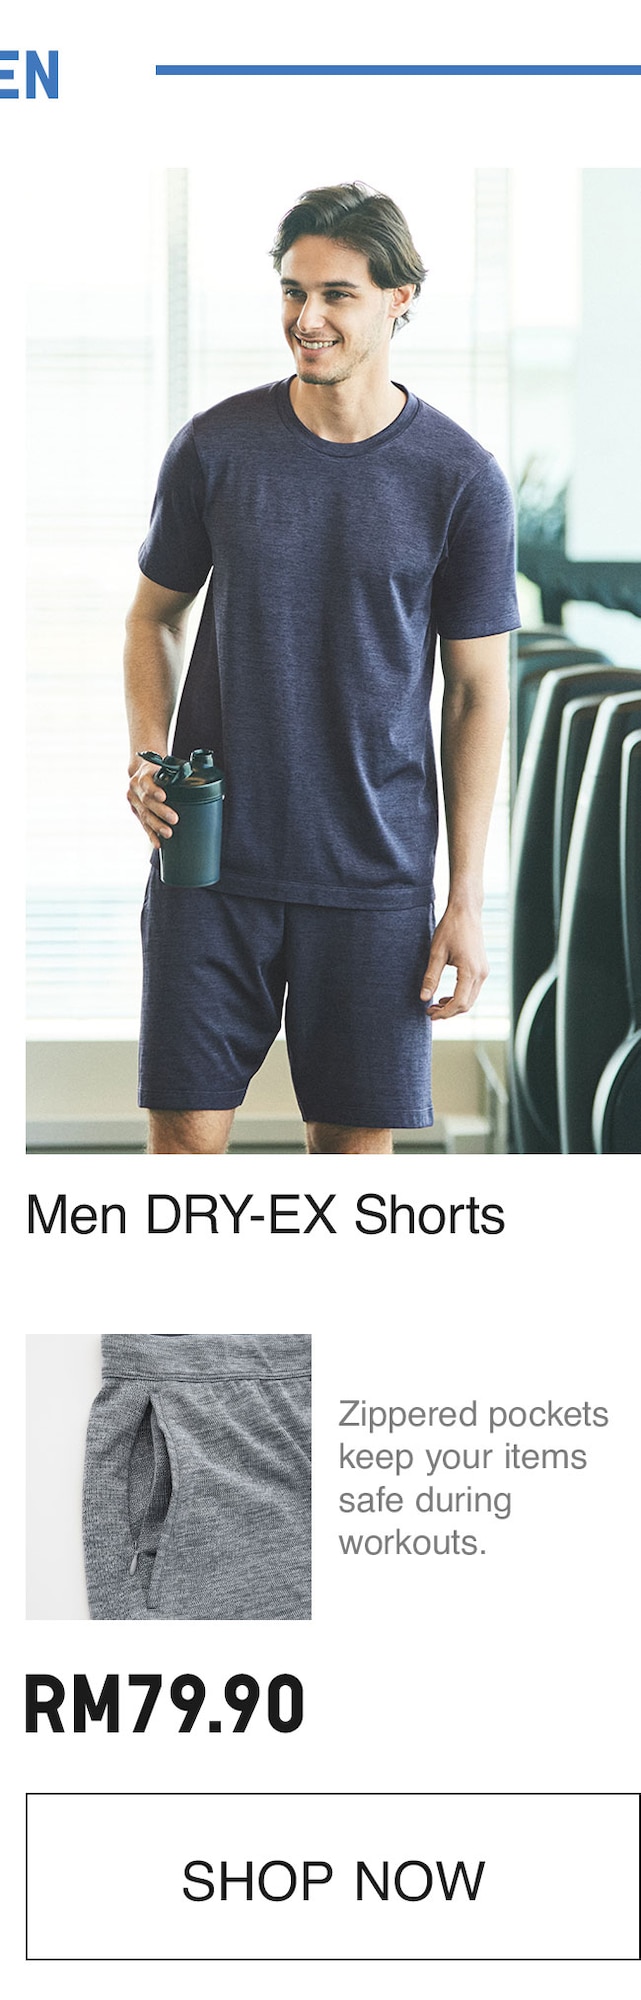 MEN DRY-EX SHORTS